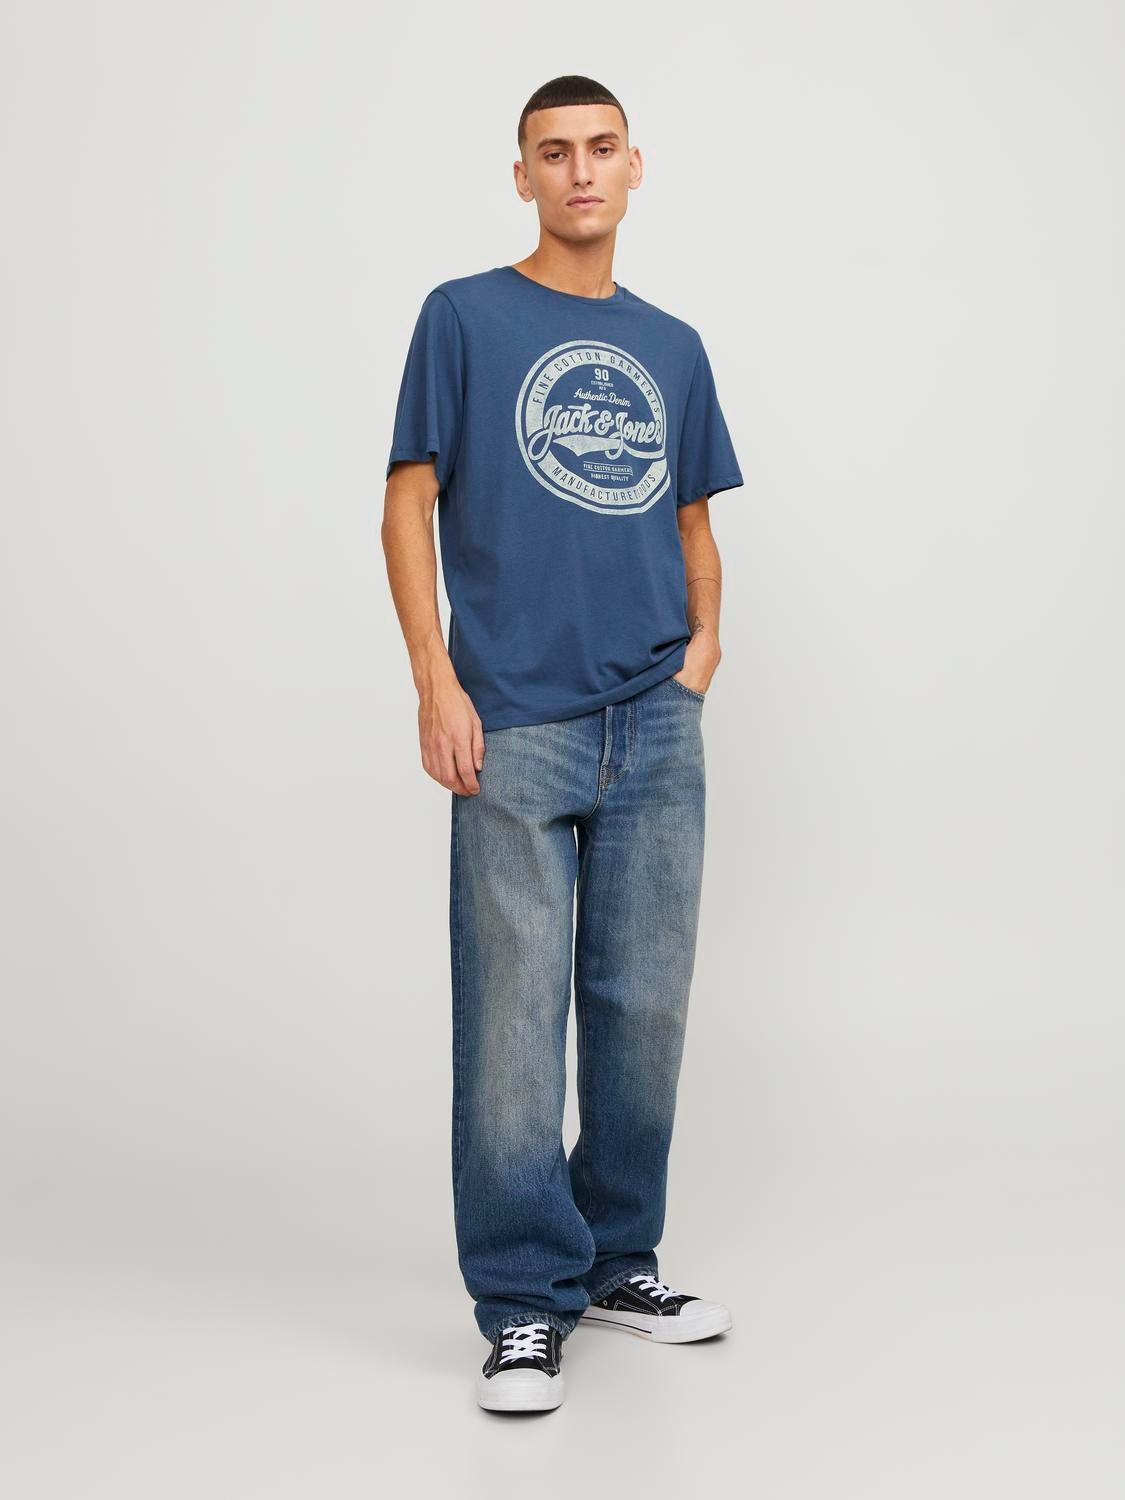 Mens T-Shirt Jack Jones Branded Short Sleeve Crew Neck Casual Top Tee Size  S-2XL